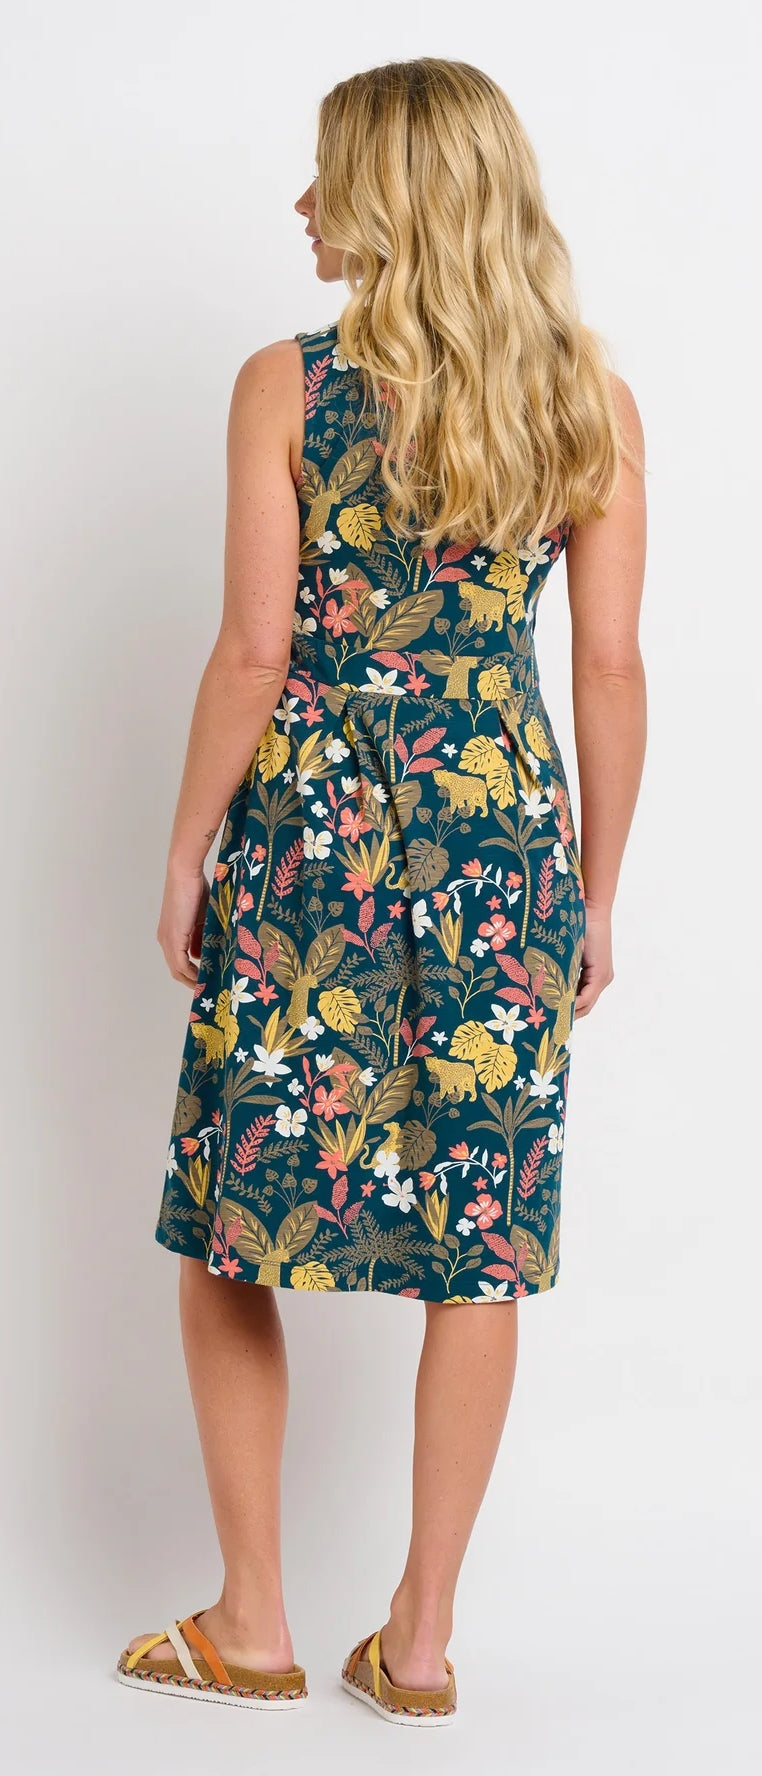 Brakeburn womens botanical jungle floral print sleeveless dress